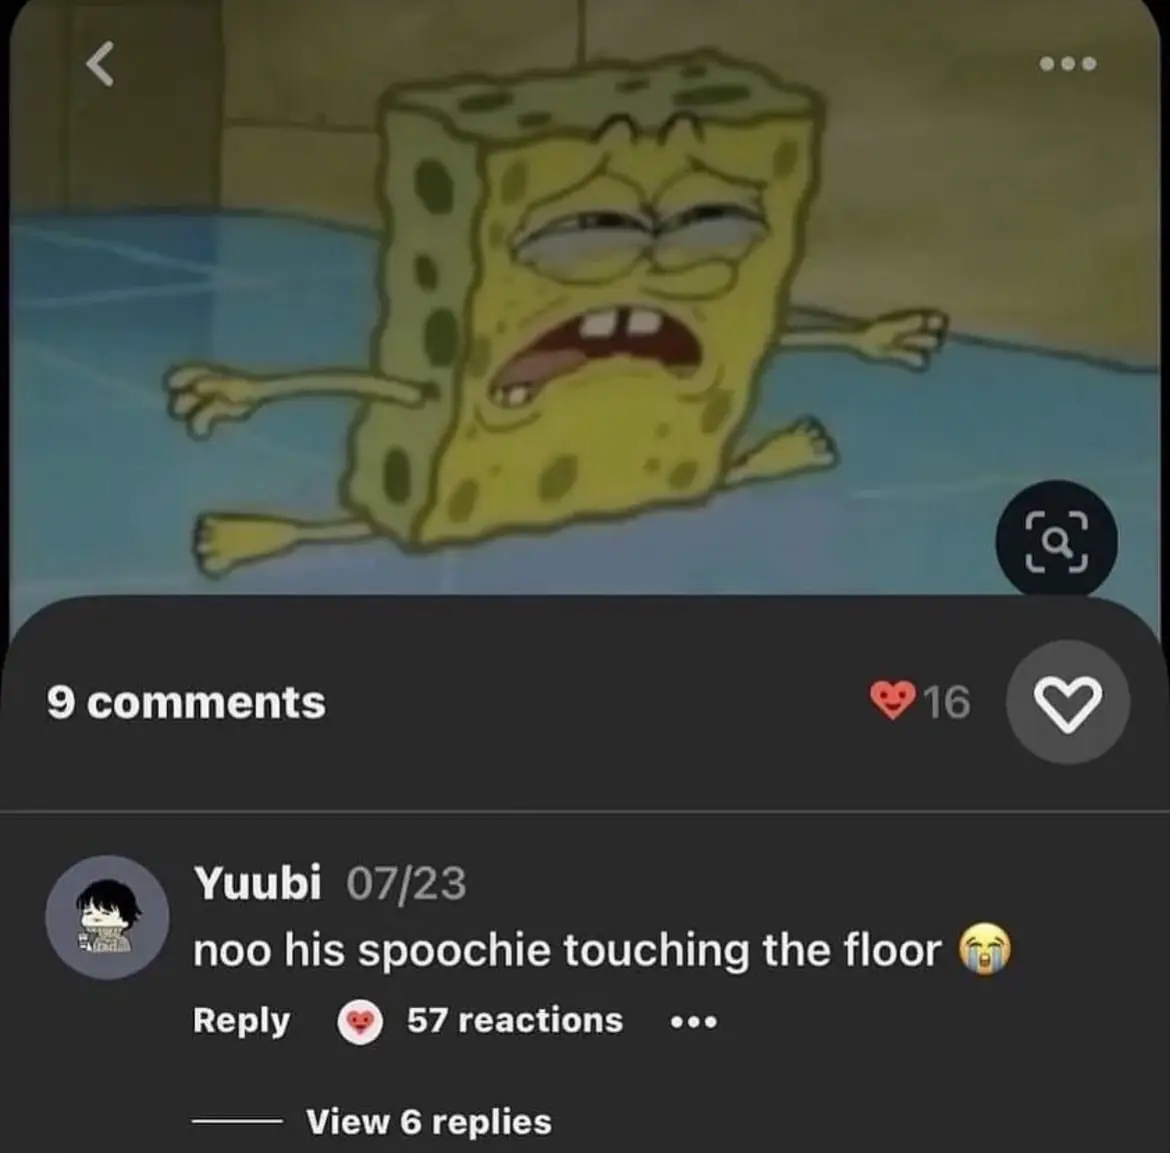  A cartoon image of a spongebob with the words "spongebob touching the floor" written below it.